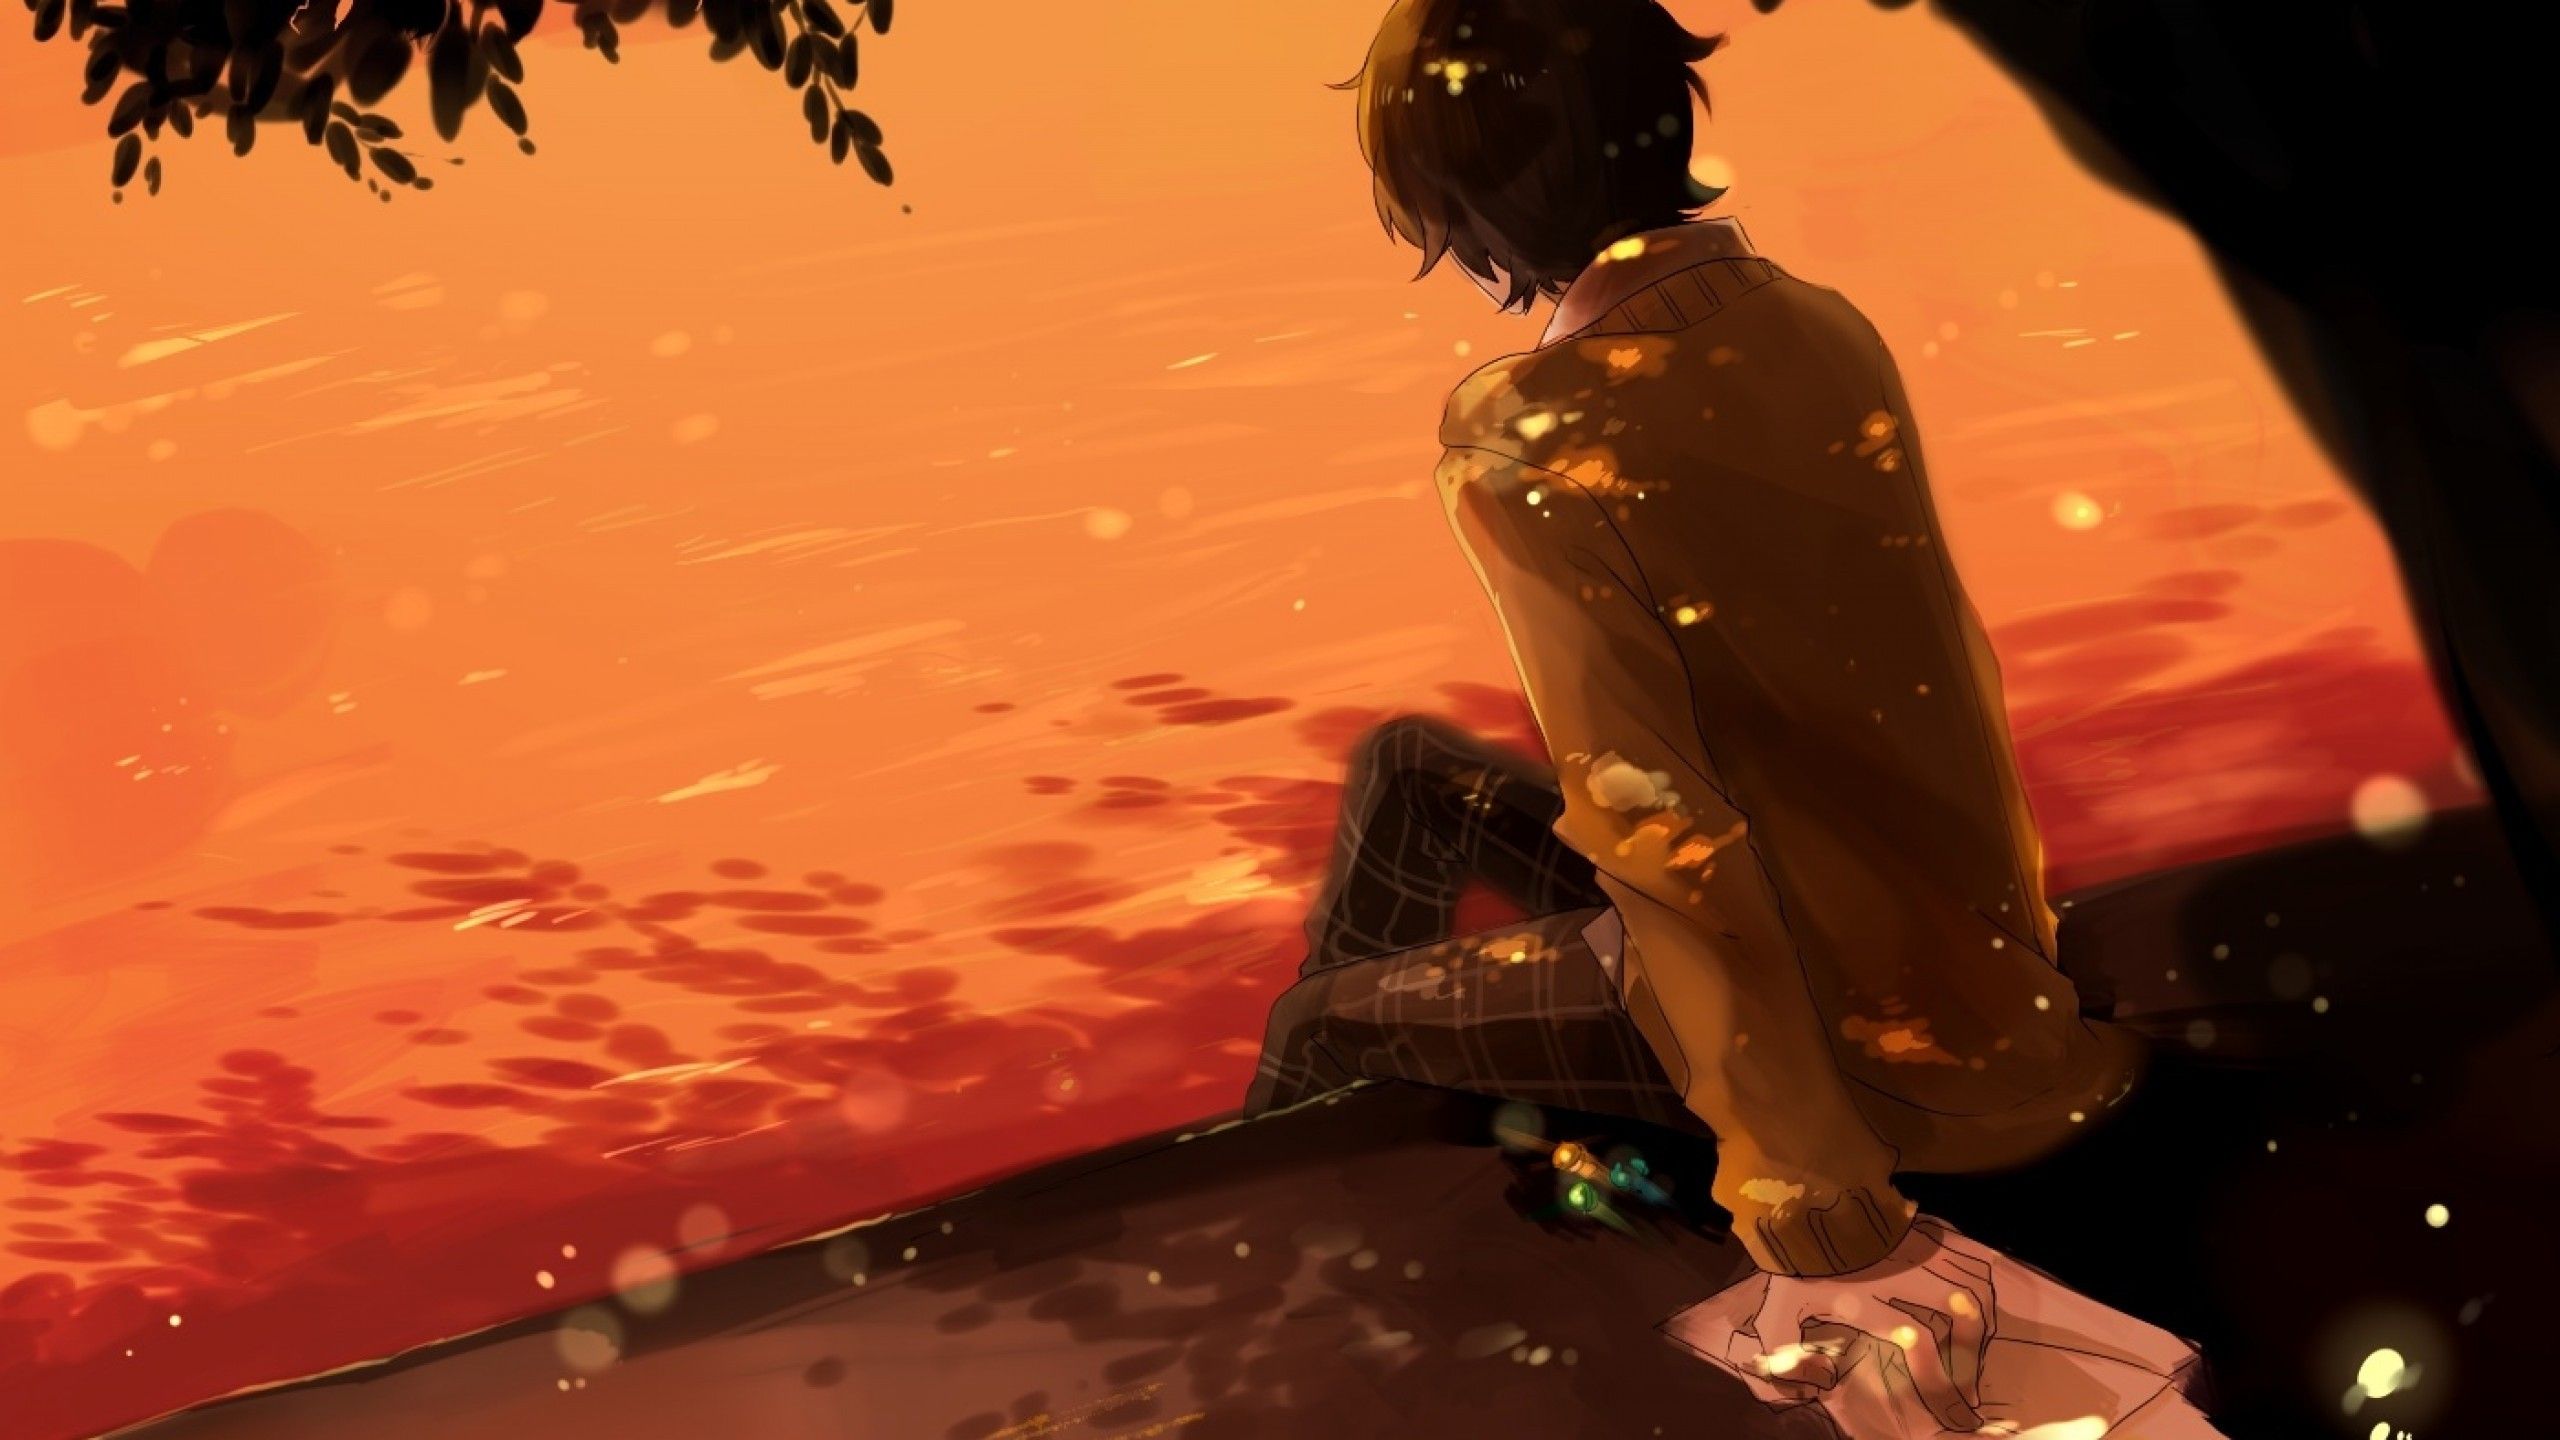 Download 2560x1440 Anime Boy, Sunset, Tree Wallpaper for iMac 27